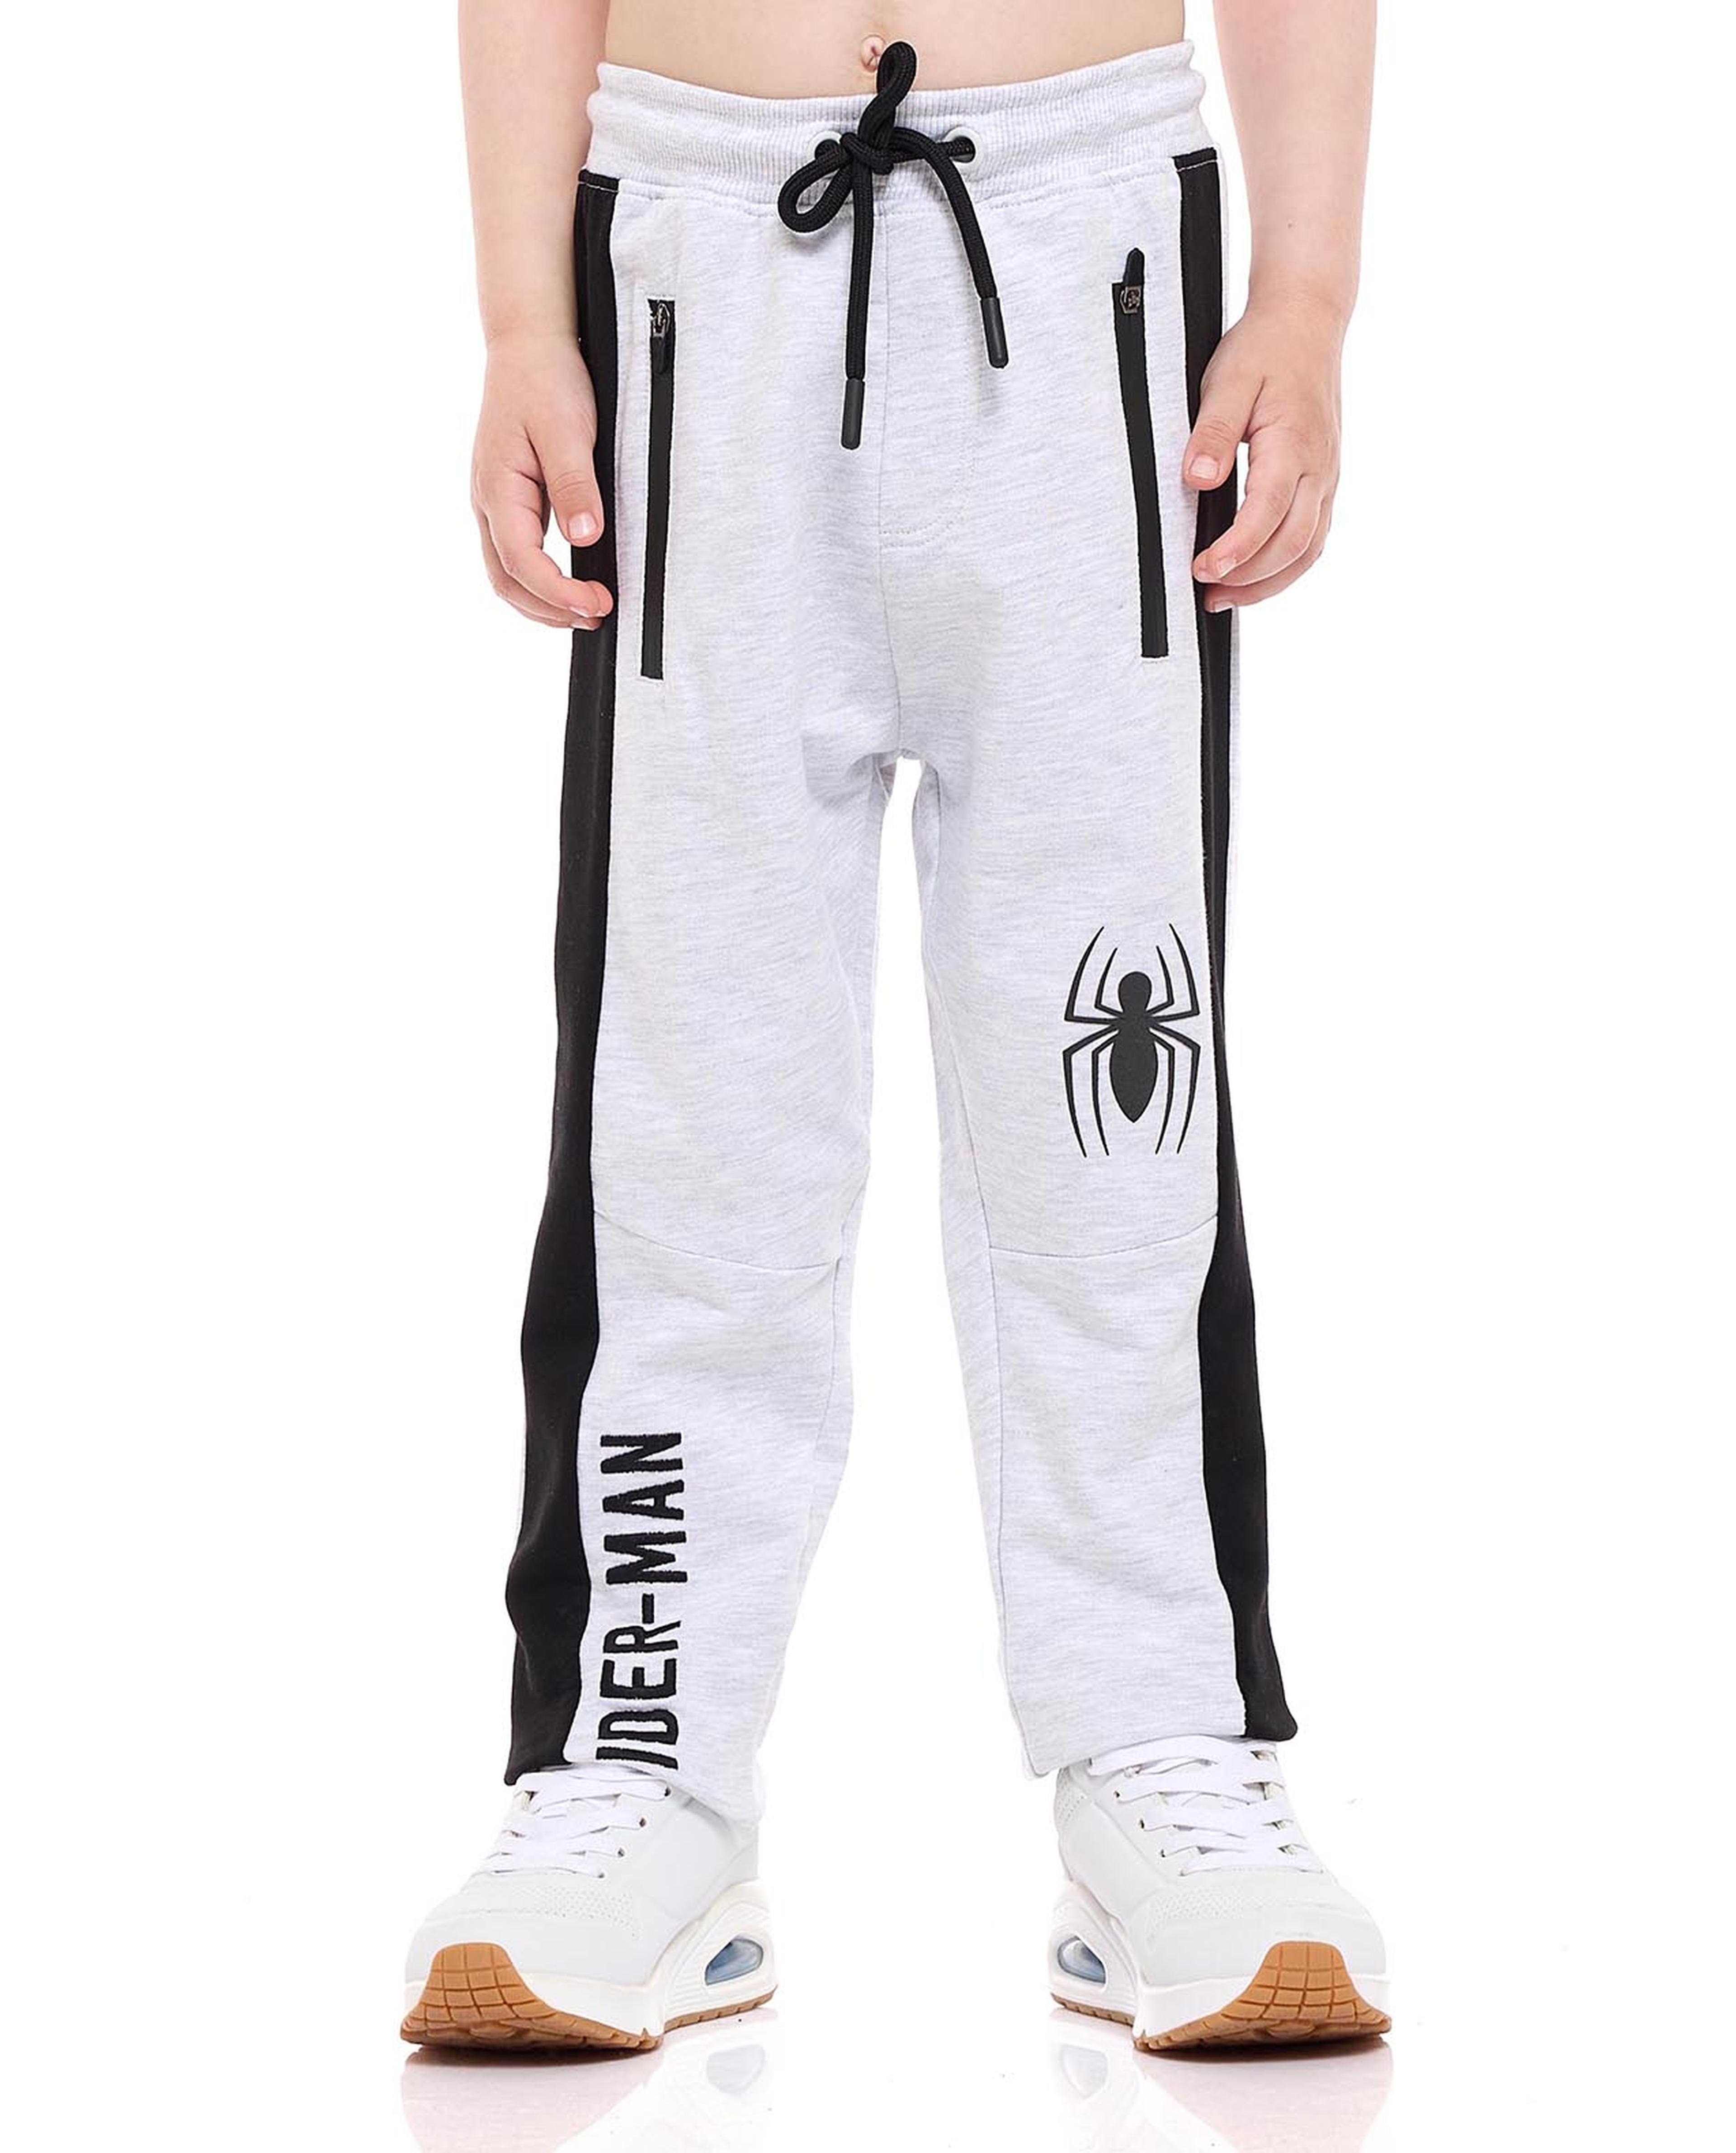 Spider-Man Print Pants with Drawstring Waist